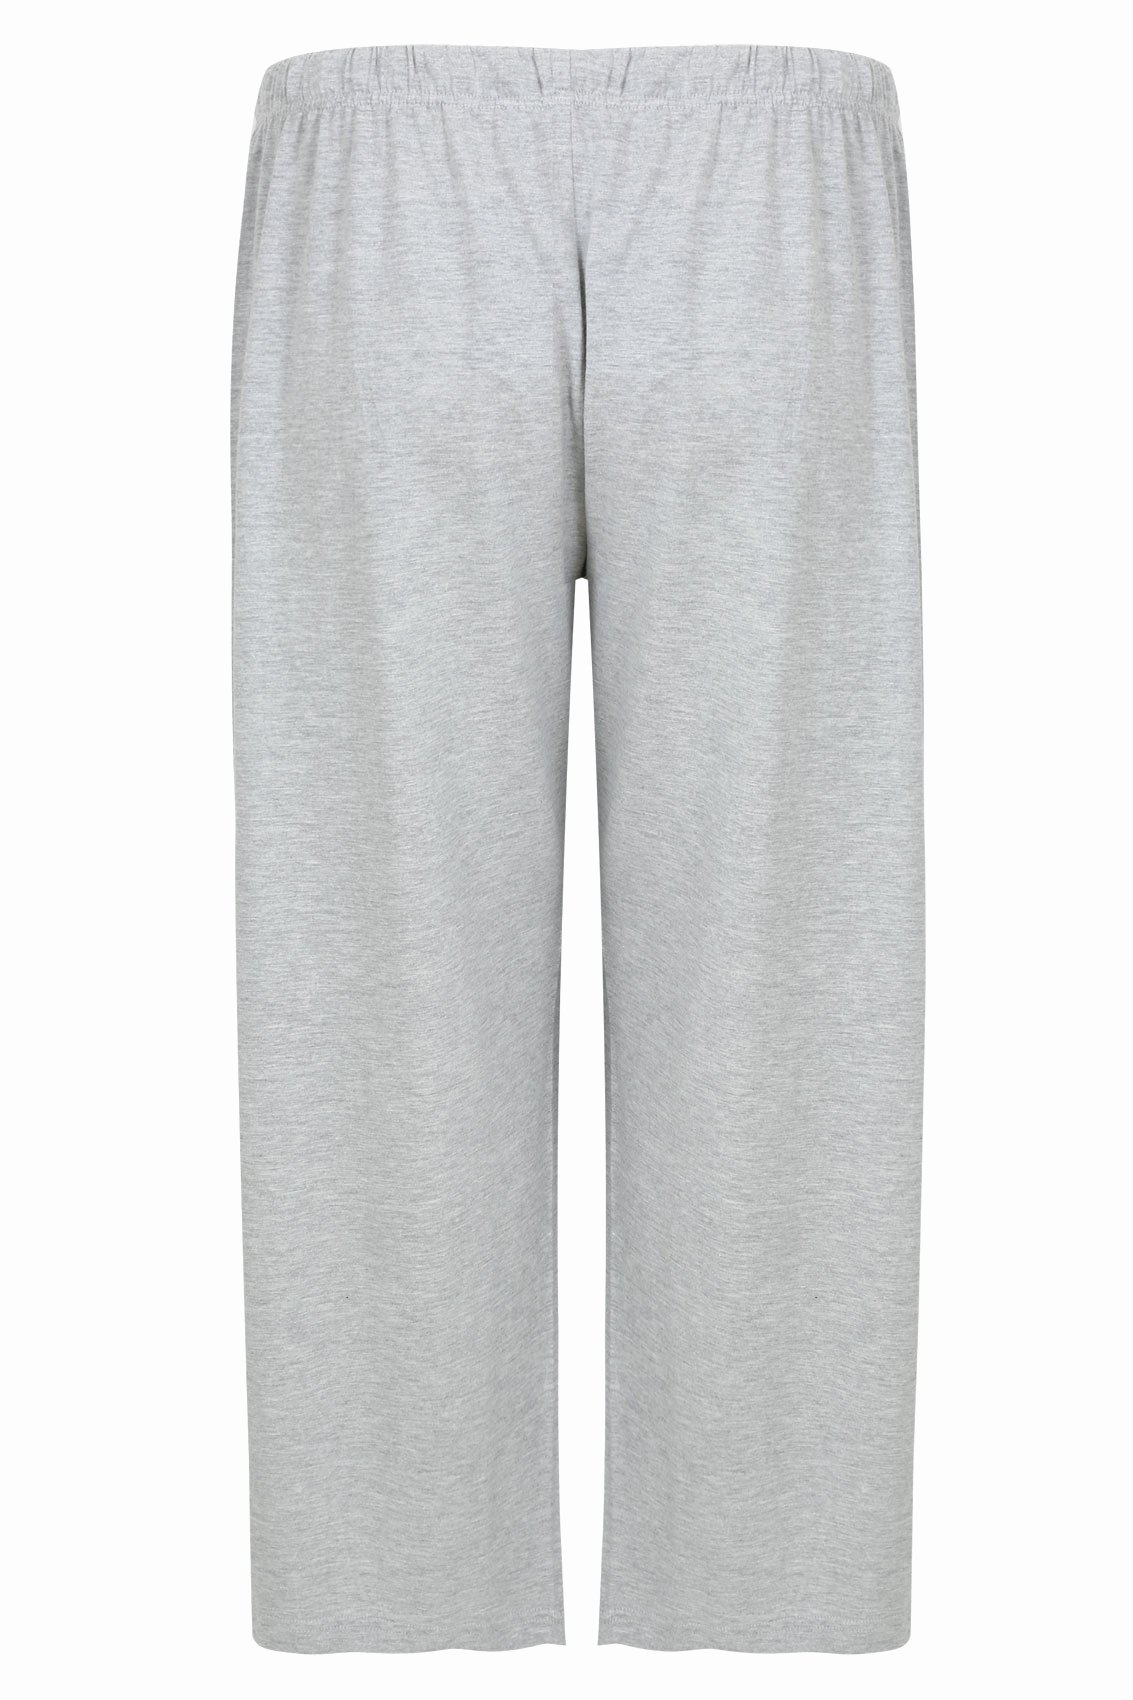 Product Line Card Template Fresh Grey Basic Cotton Pyjama Bottoms Plus Size 16 to 32